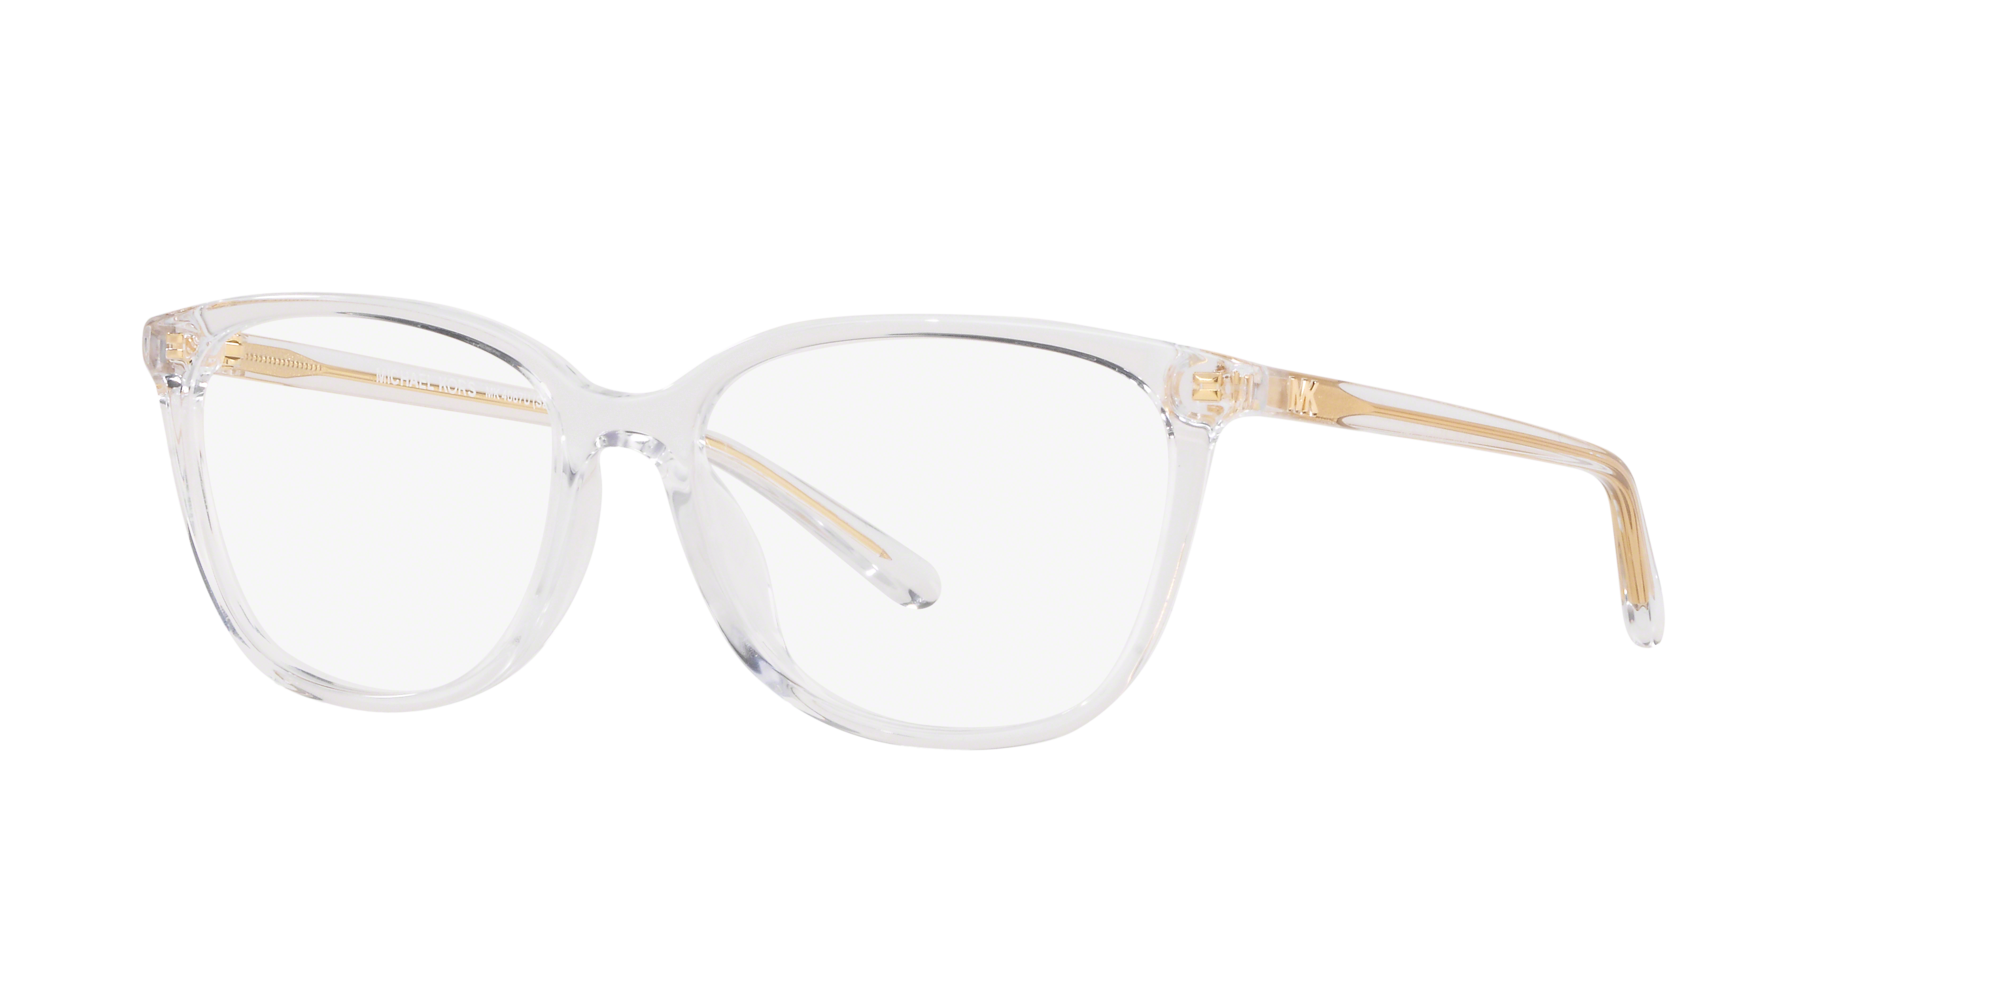 Angle_Left01 Michael Kors Santa Clara MK 4067U Glasses Transparent / Transparent, Clear